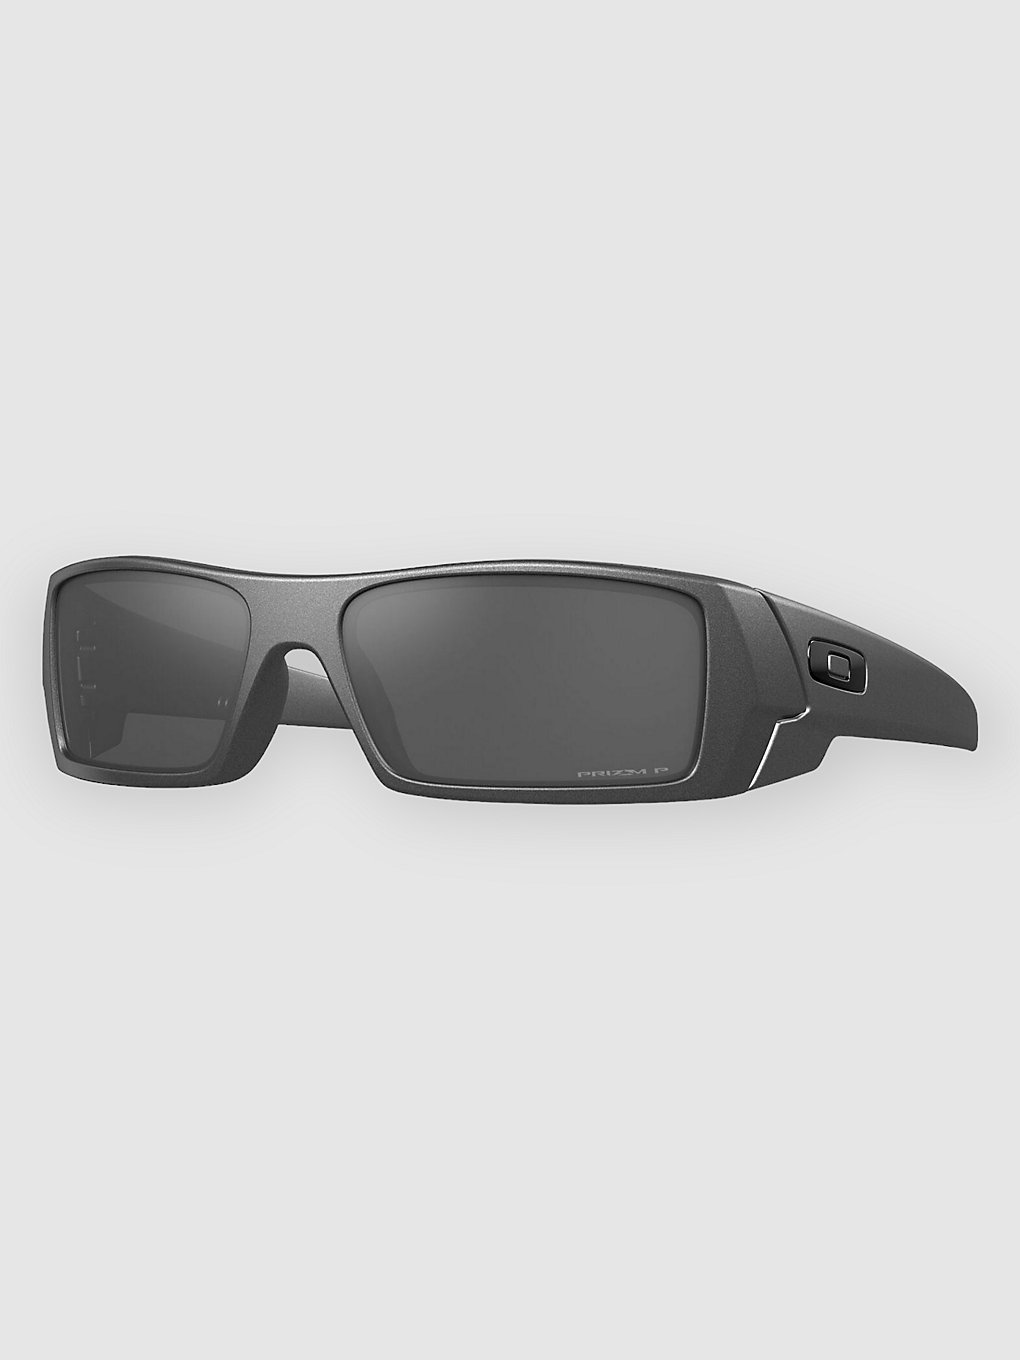 Oakley Gascan Steel Sunglasses prizm black polarized